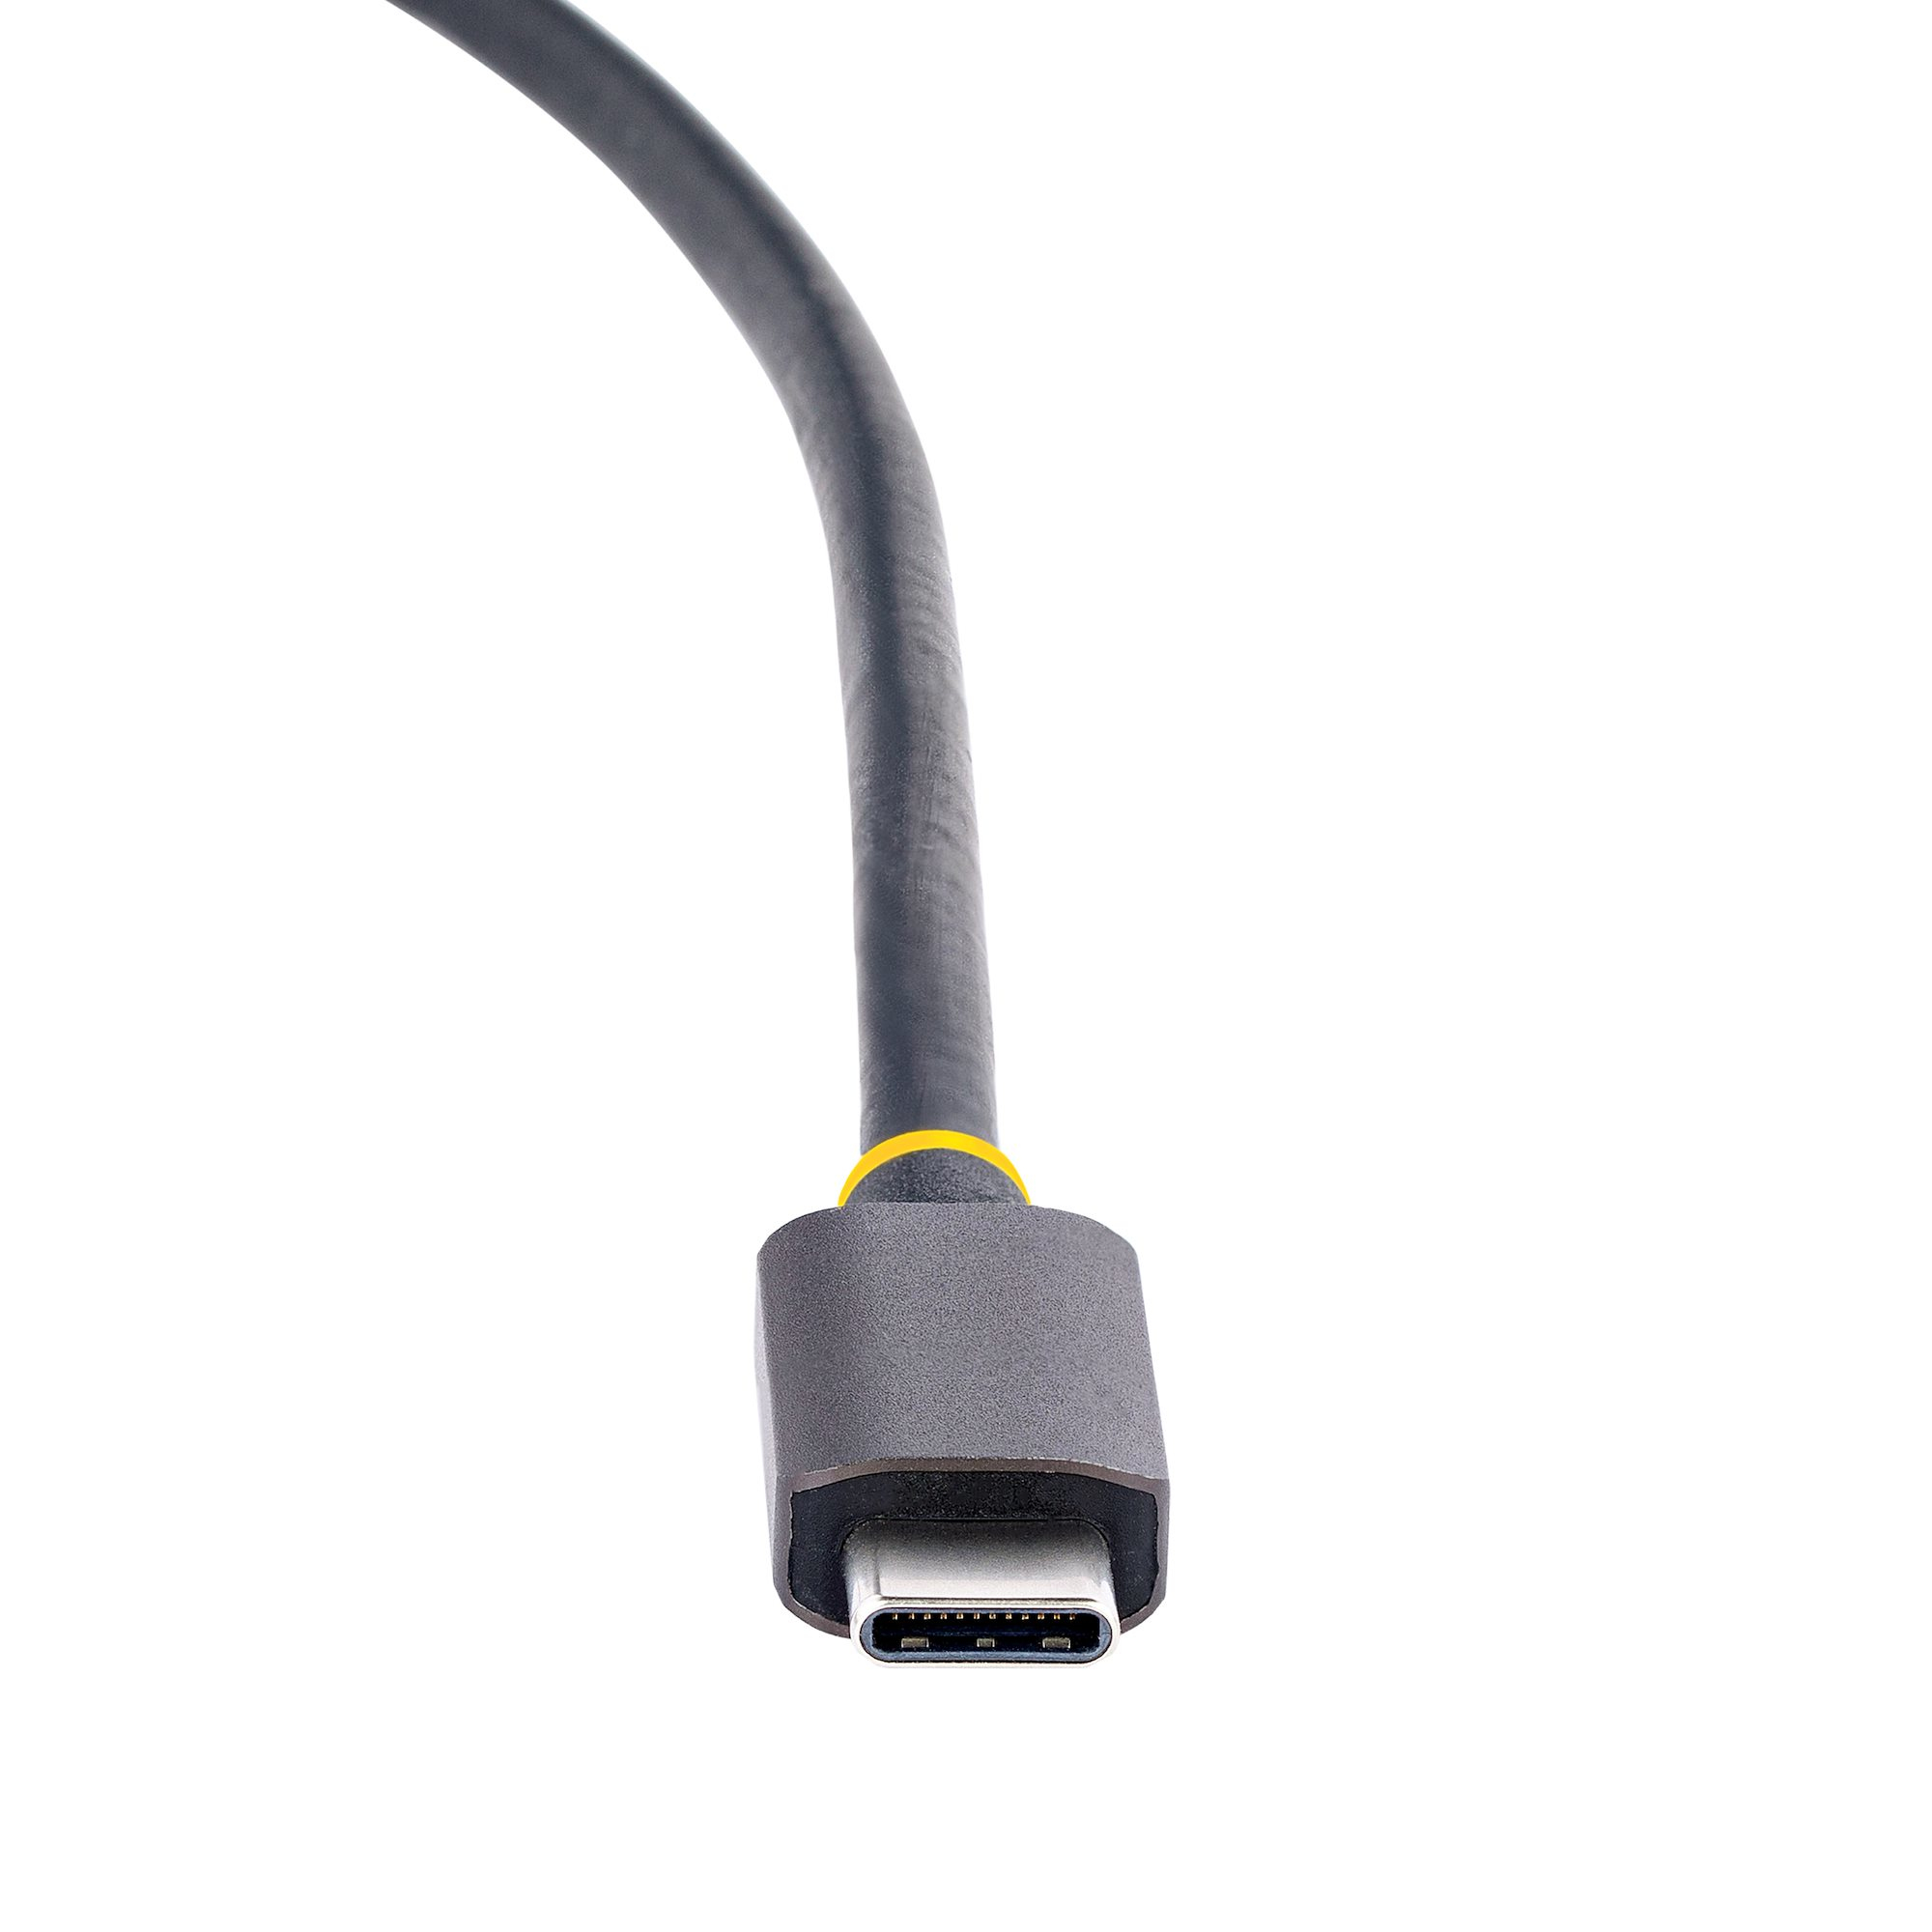 Adaptador USB-C HDMI 4k 60Hz Lector Tarjetas Multipuertos HUB USB 3.0